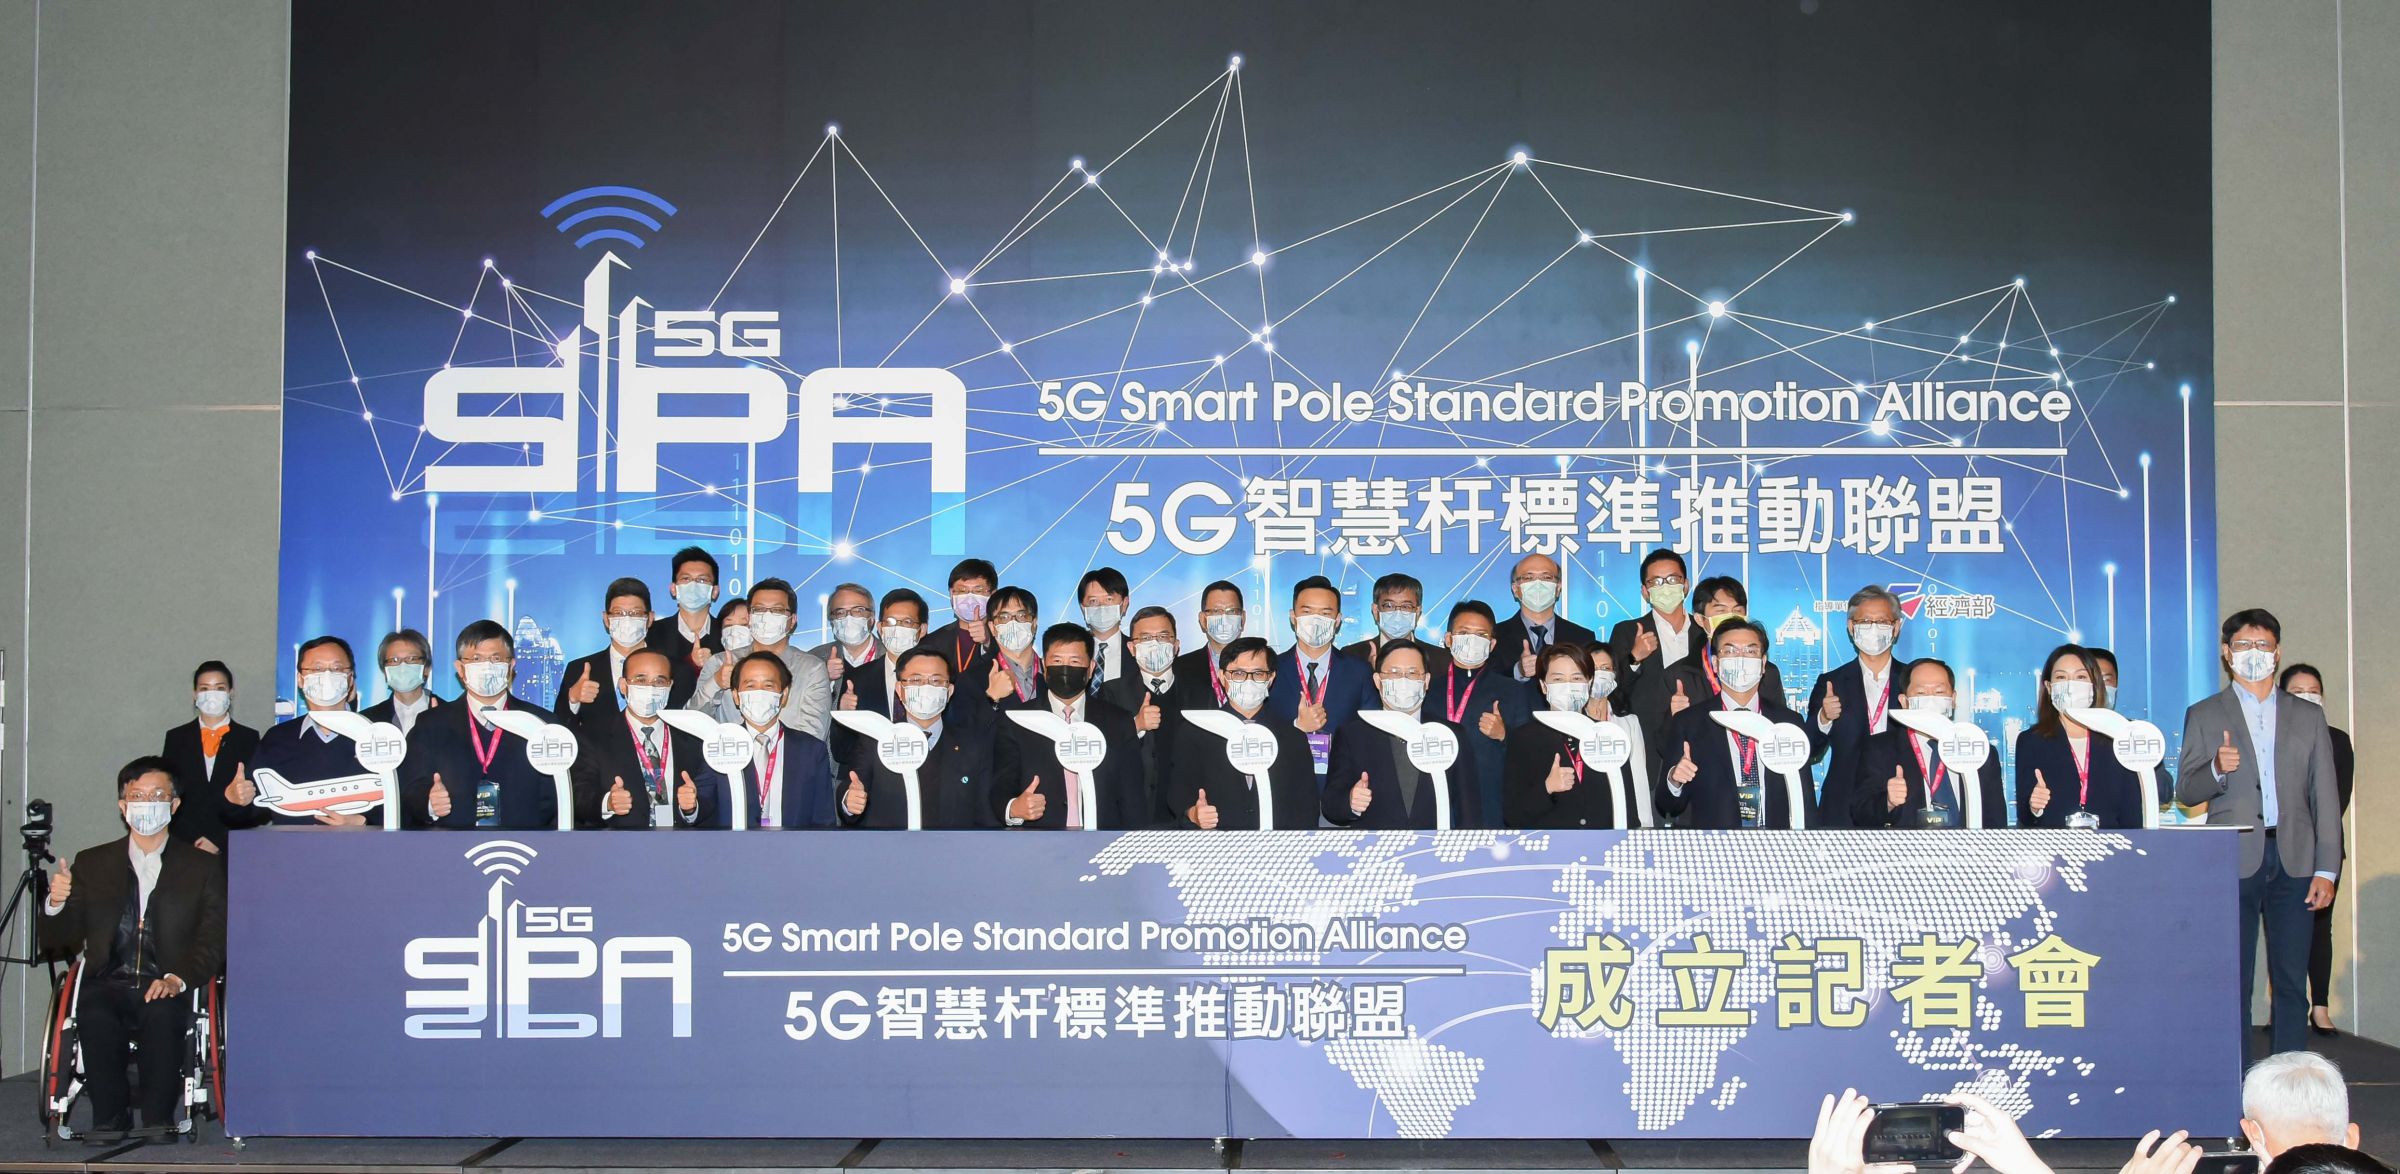 Dumalo si Proscend sa press conference ng 5G Smart Pole Standard Promotion Alliance.